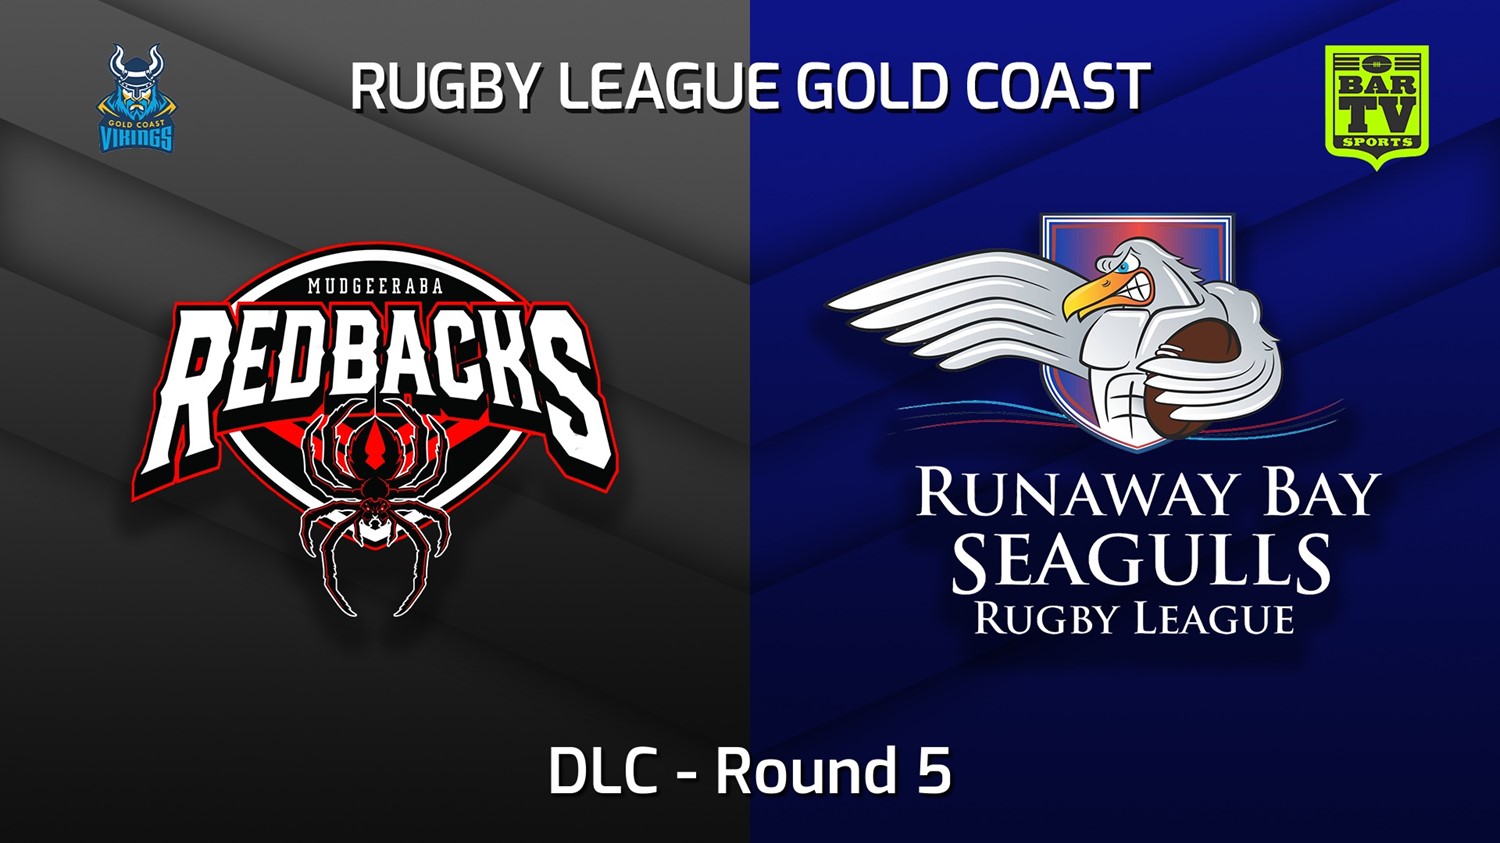 220508-Gold Coast Round 5 - DLC - Mudgeeraba Redbacks v Runaway Bay Seagulls Slate Image